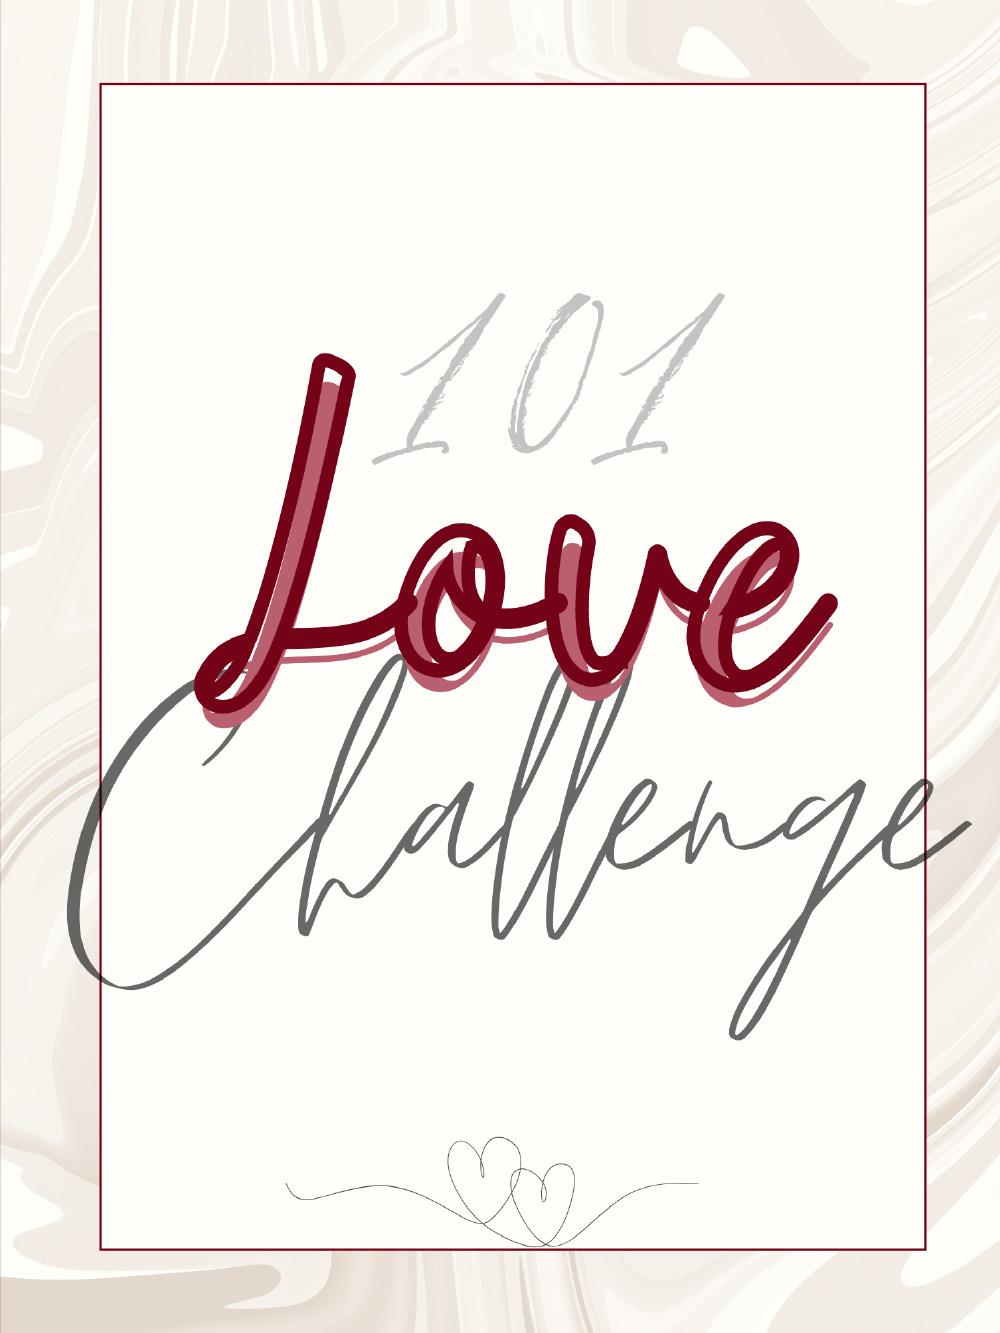 101 Love Challenge